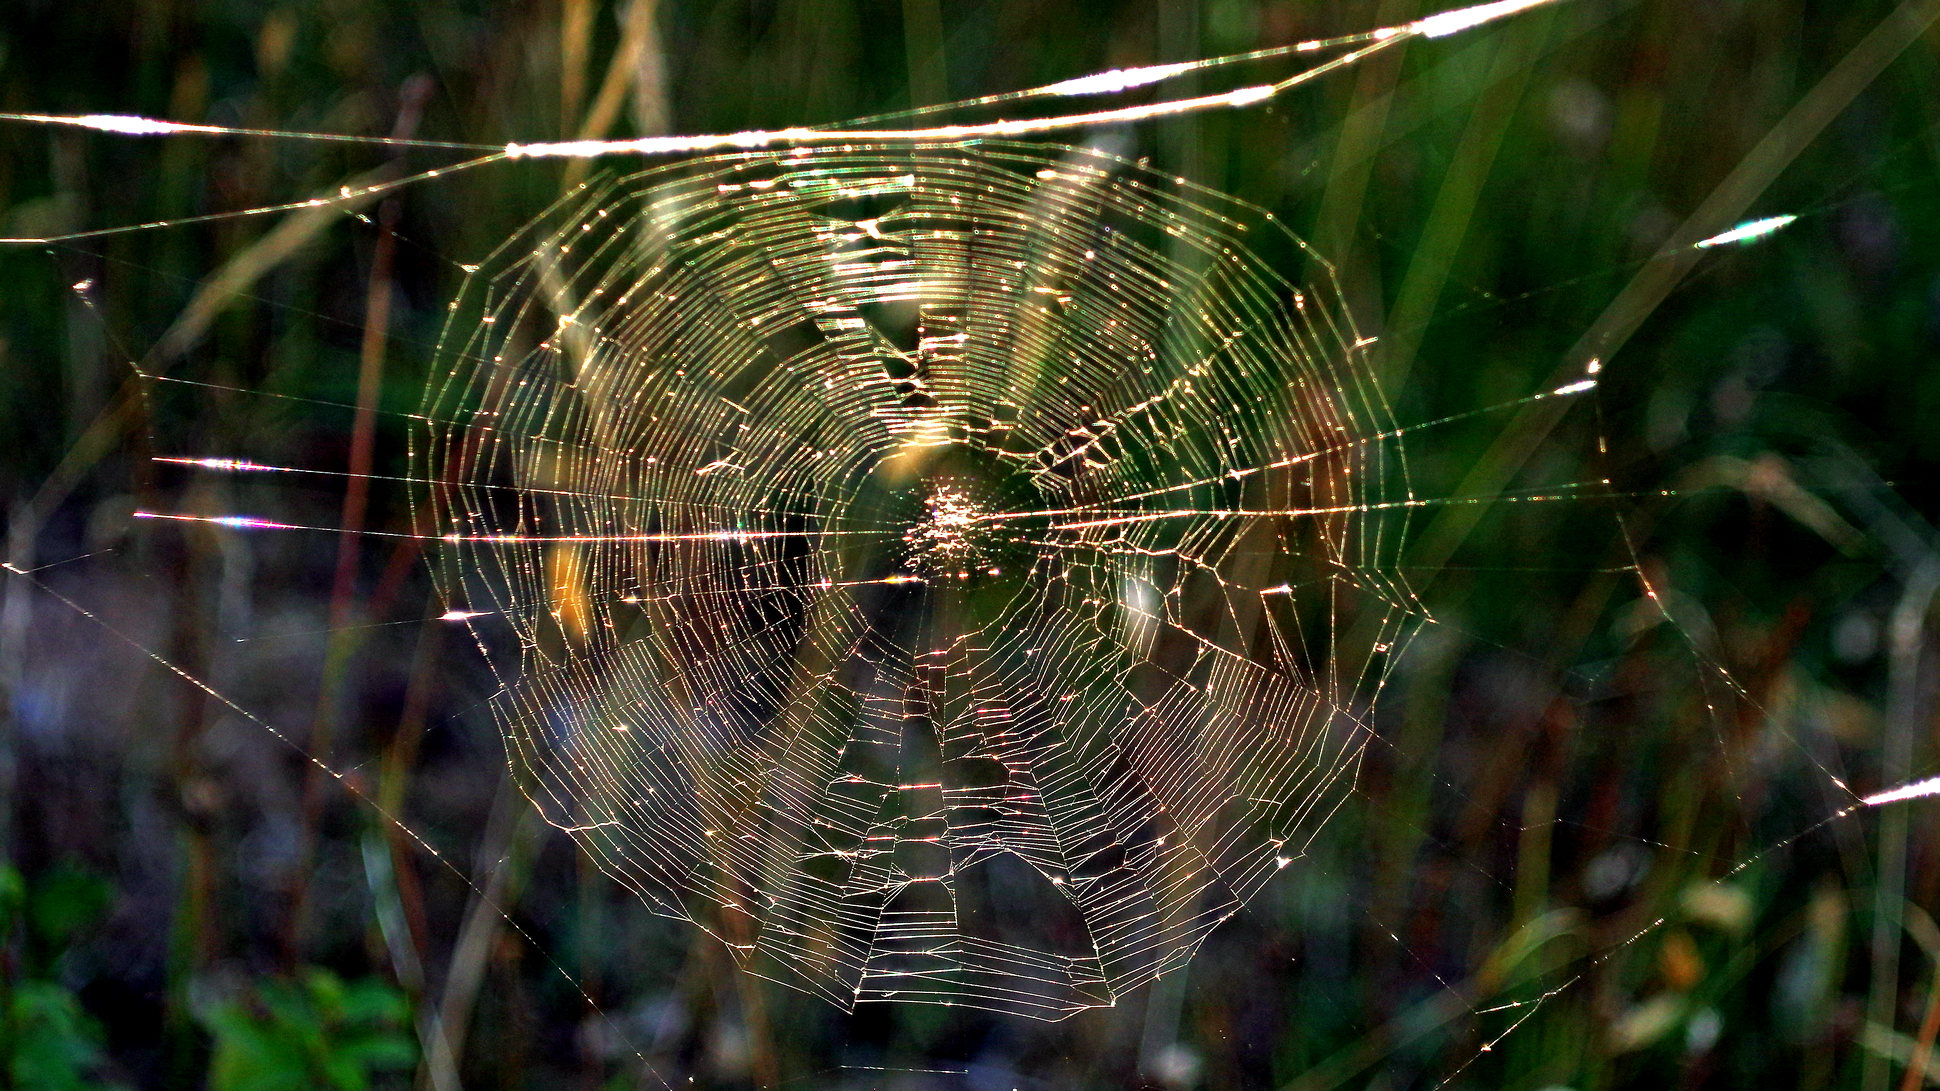 Evening light on a spider's web.